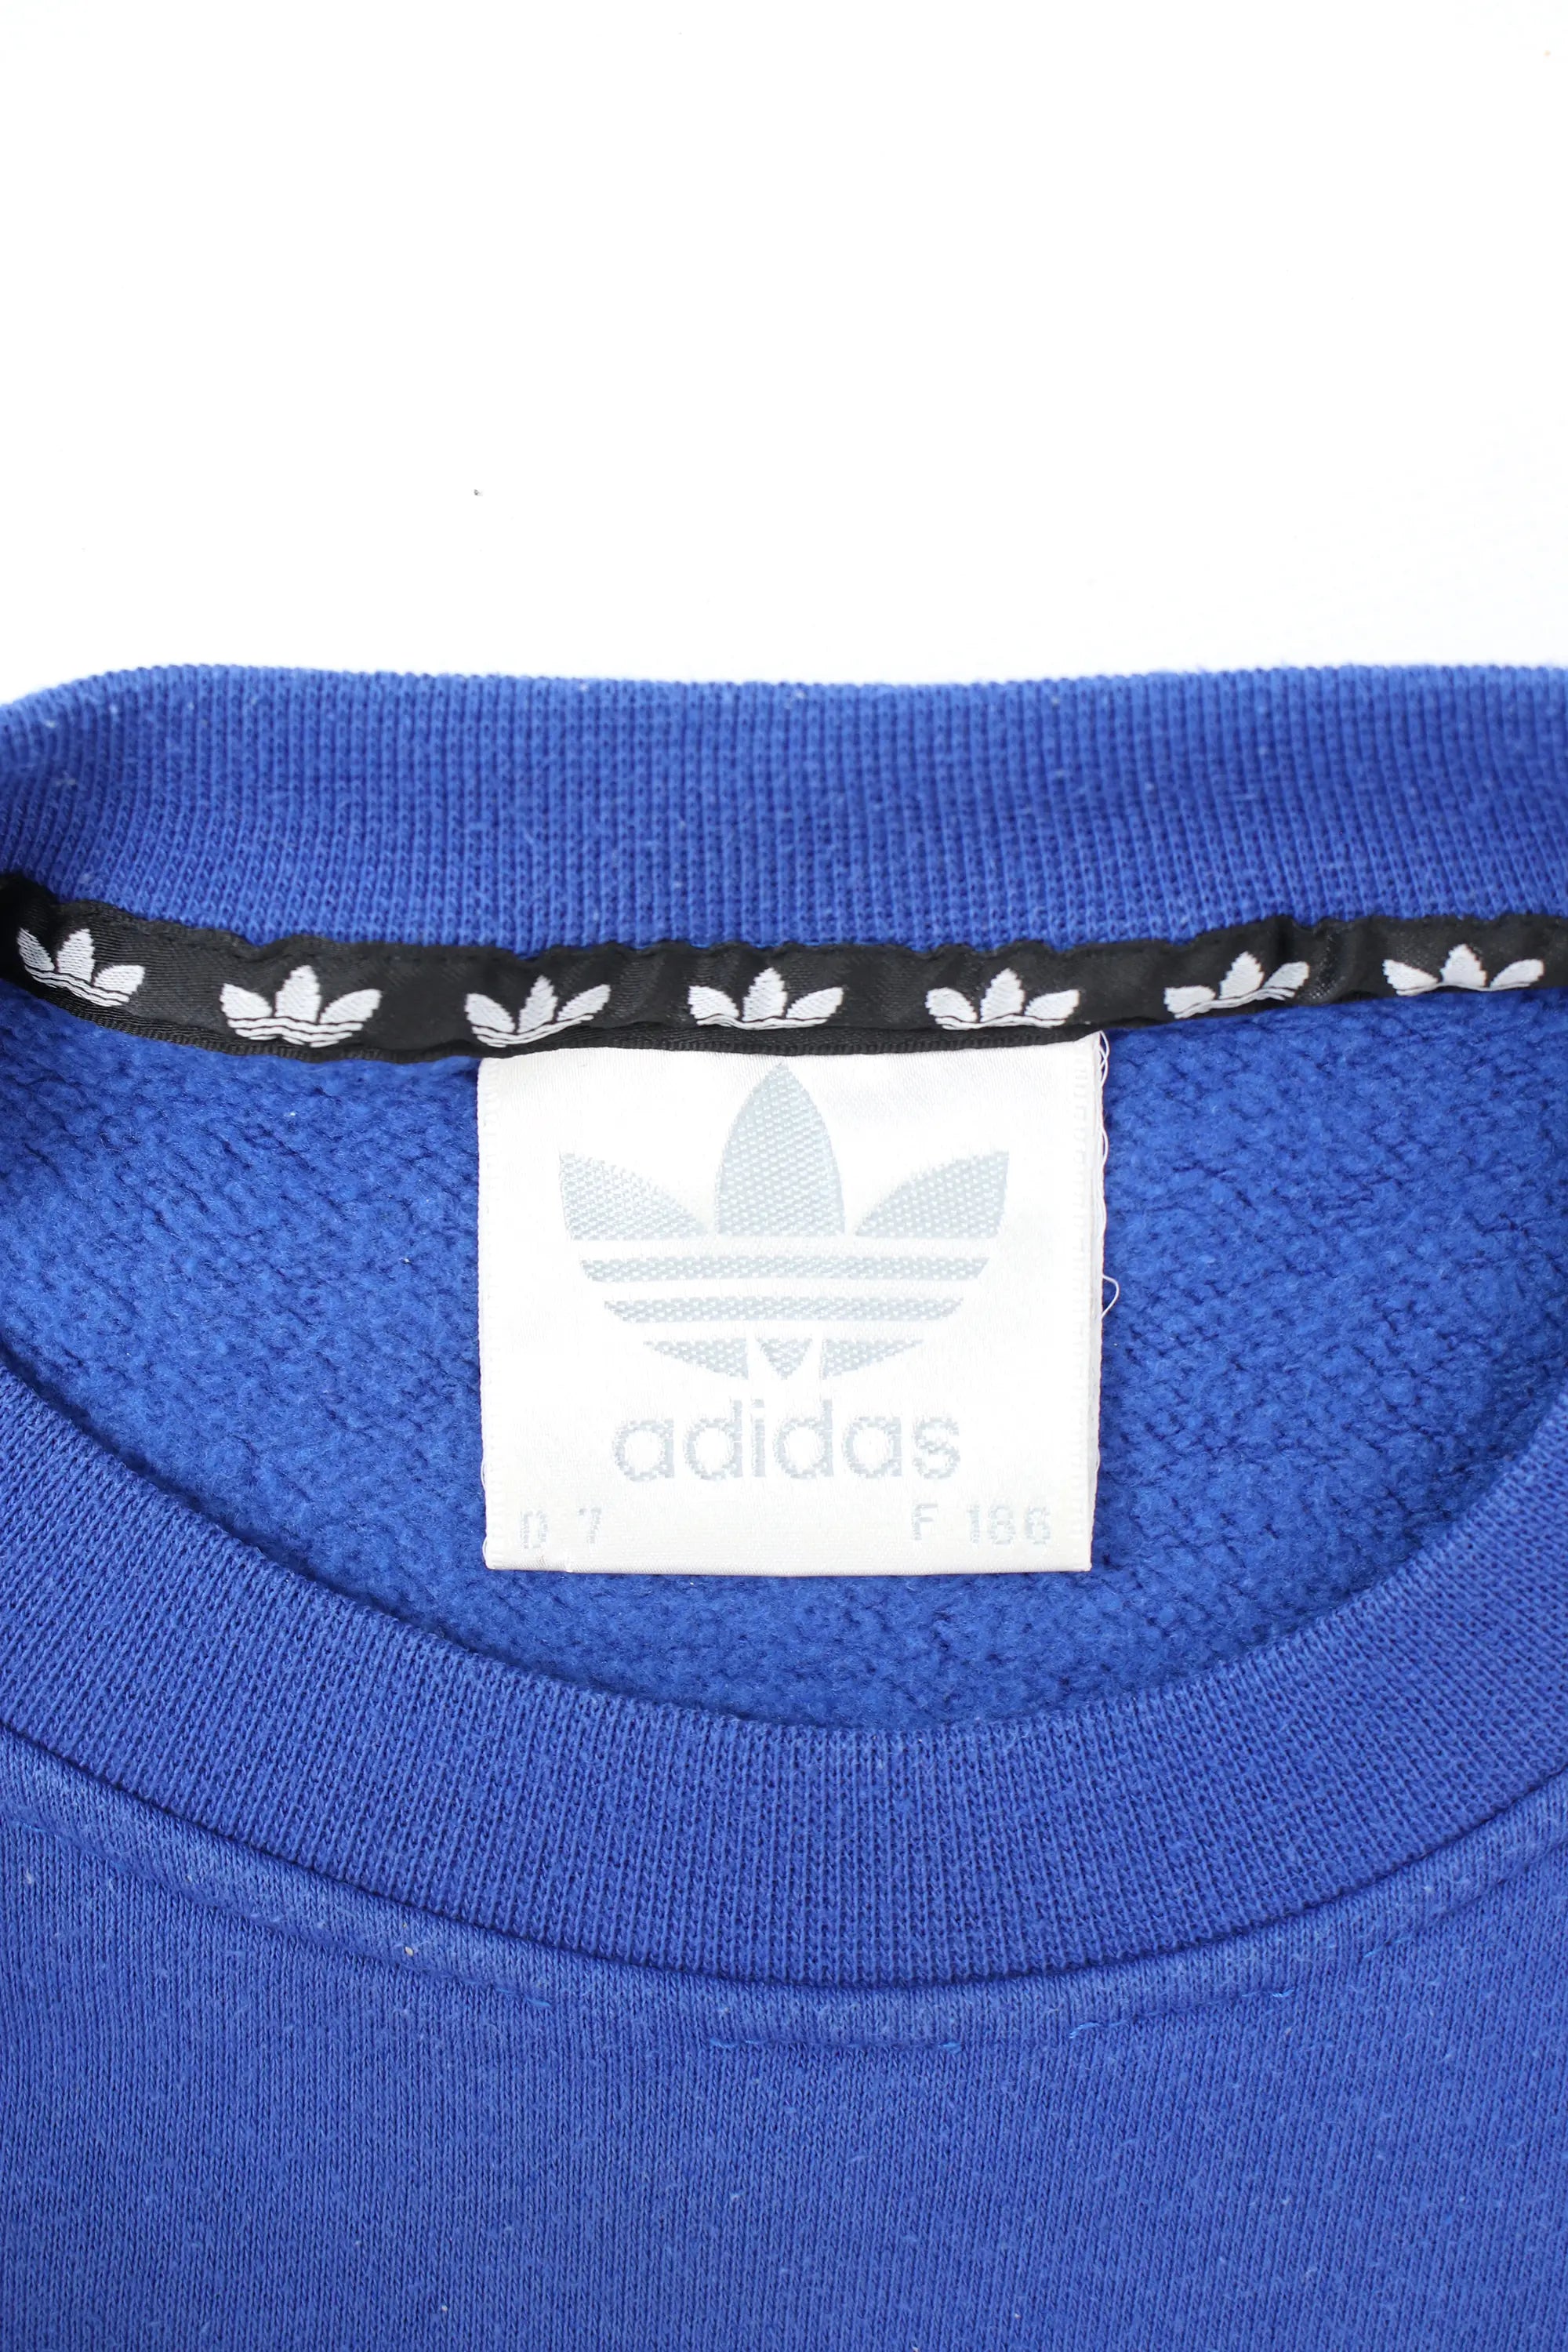 Adidas Big Trefoil Sweater